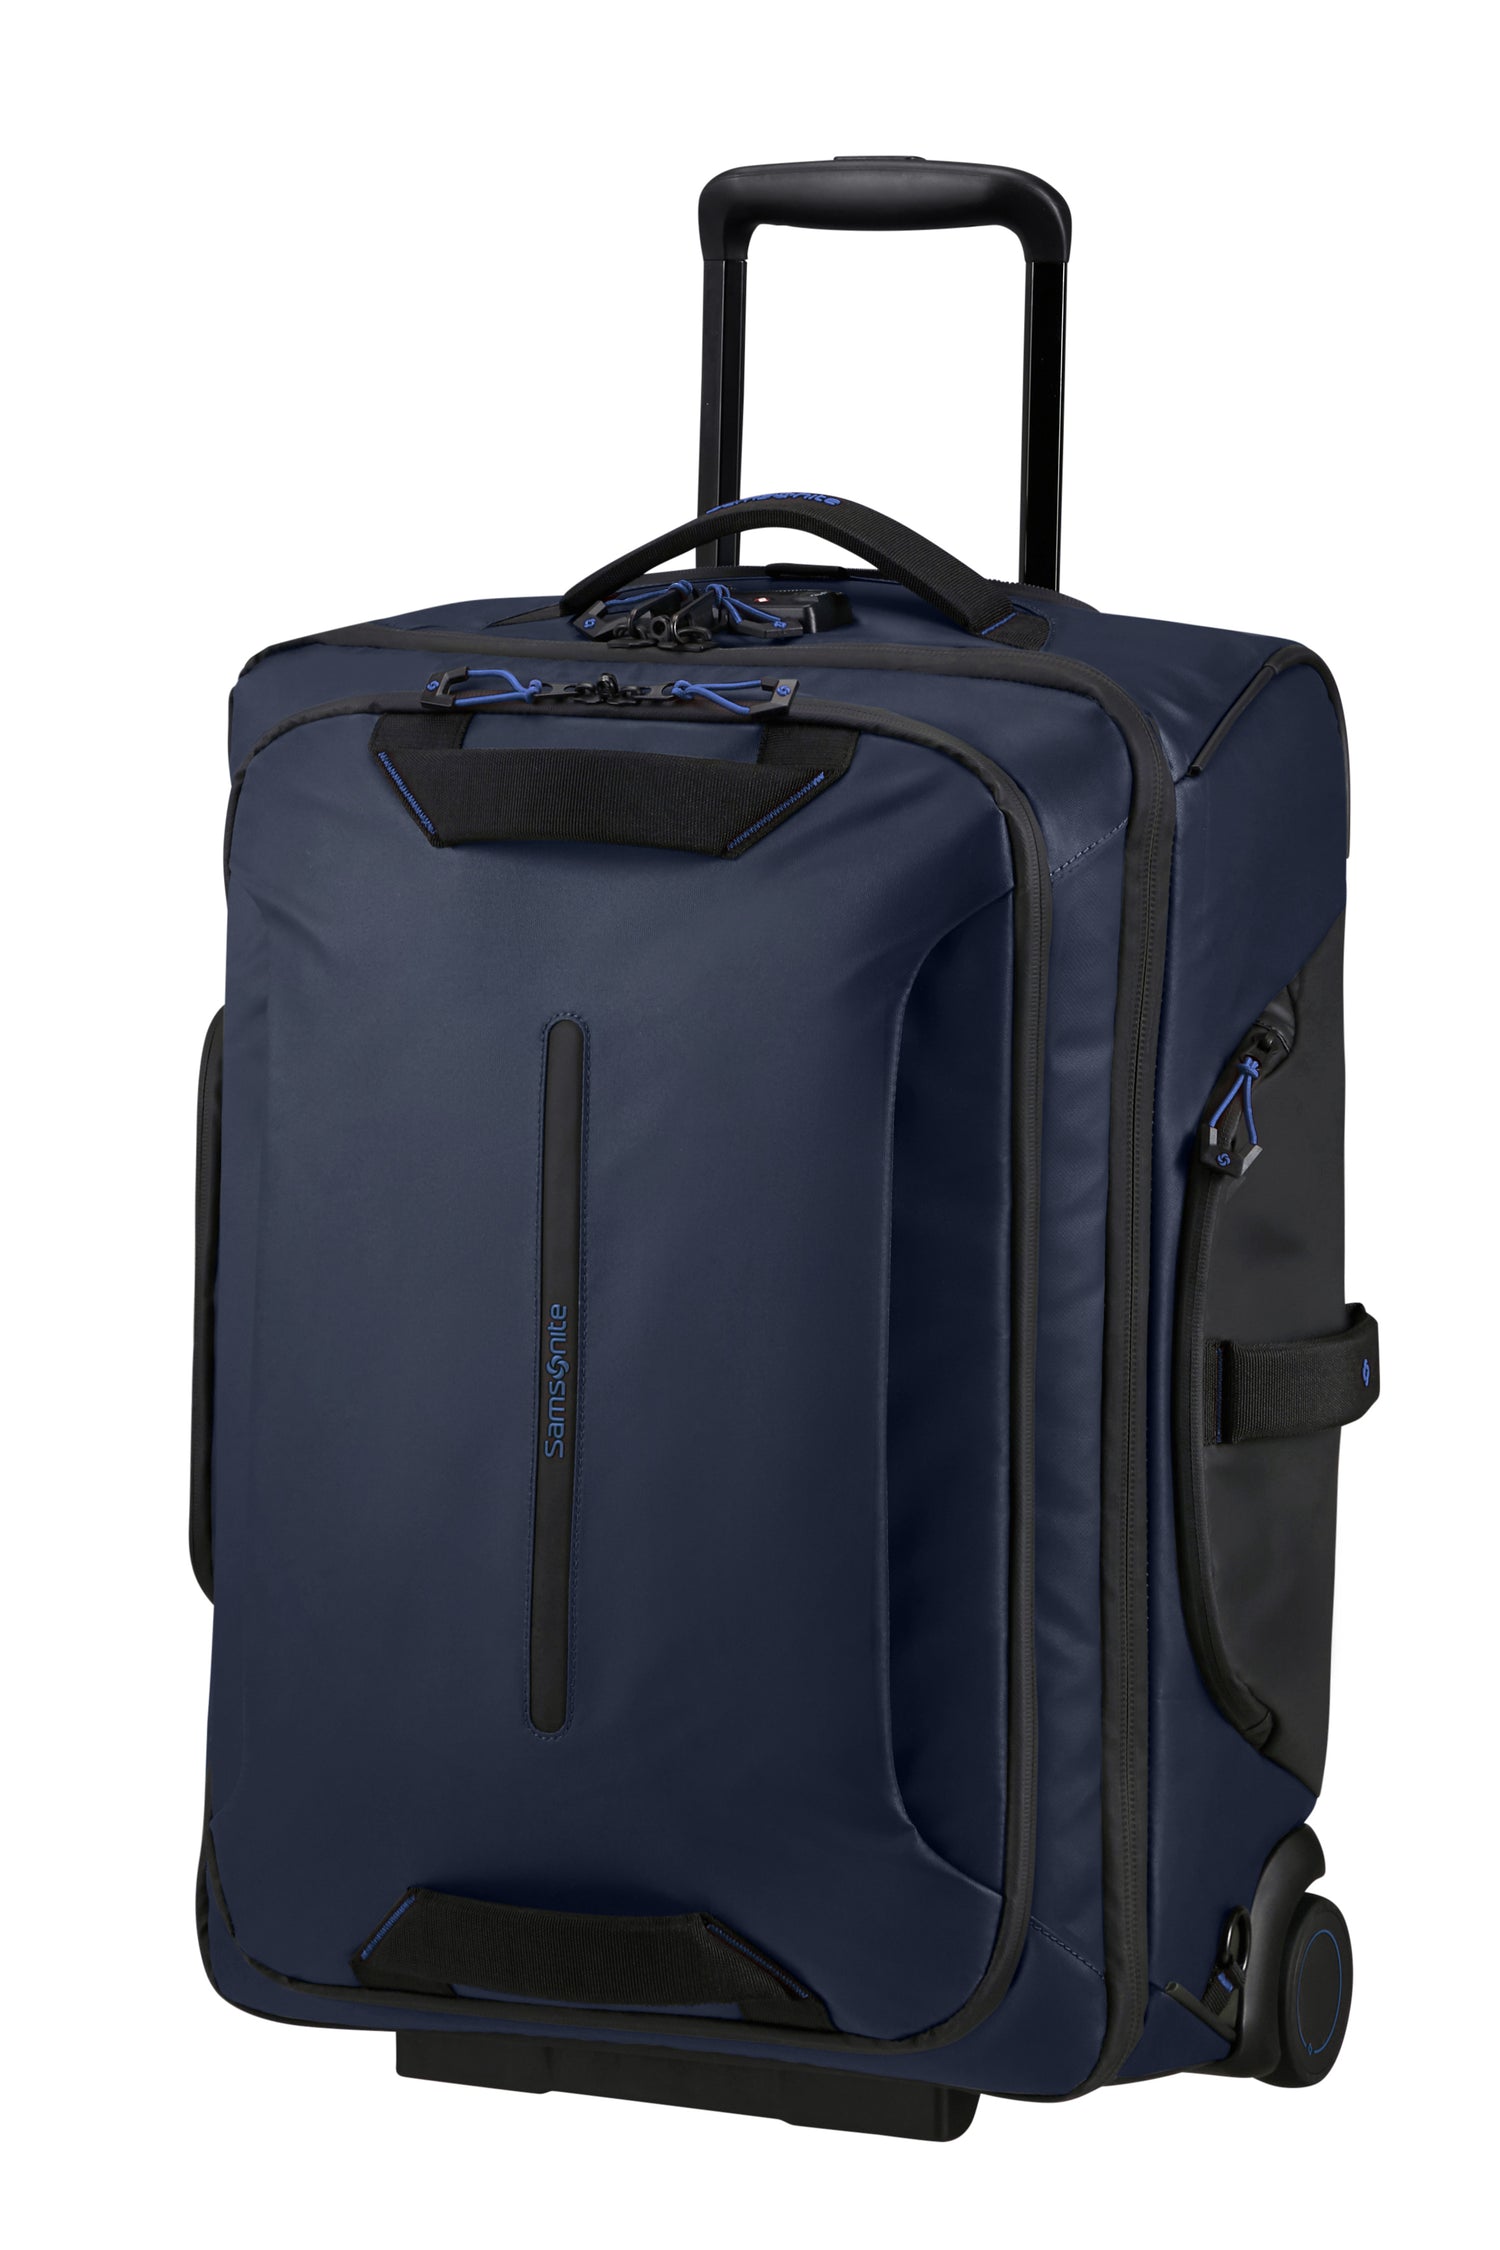 Samsonite Ecodiver Duffle Backpack with Wheels 55cm